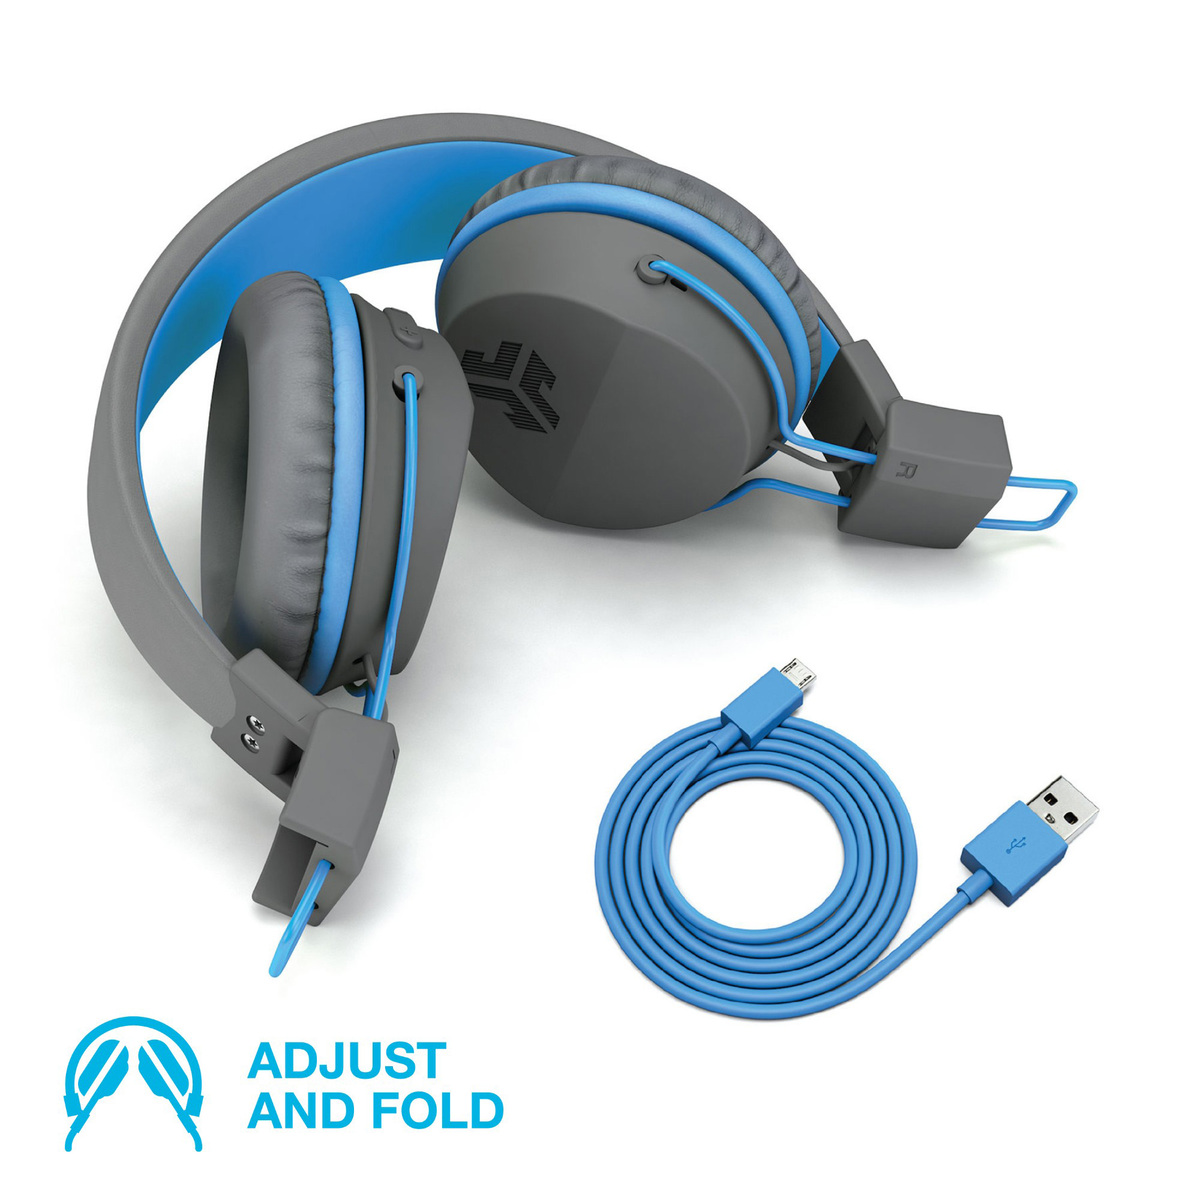 JLab JBuddies Kids Wireless Headphones Grey-Blue